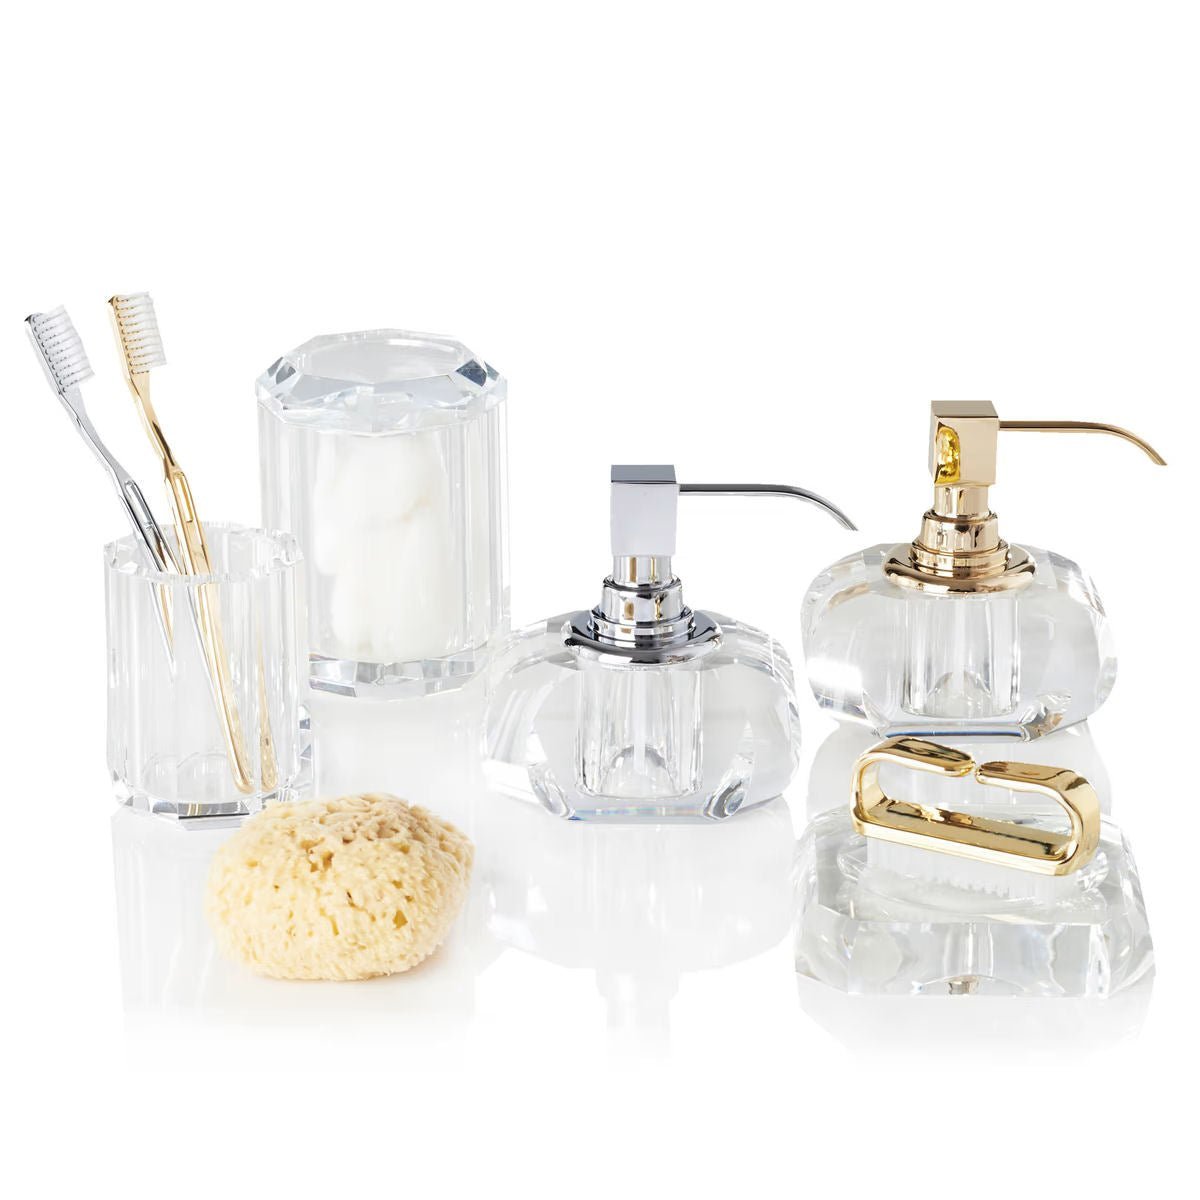 Shiny Gold Glass Liquid Soap Dispenser | Crystal Clear - |VESIMI Design| Luxury Bathrooms and Home Decor